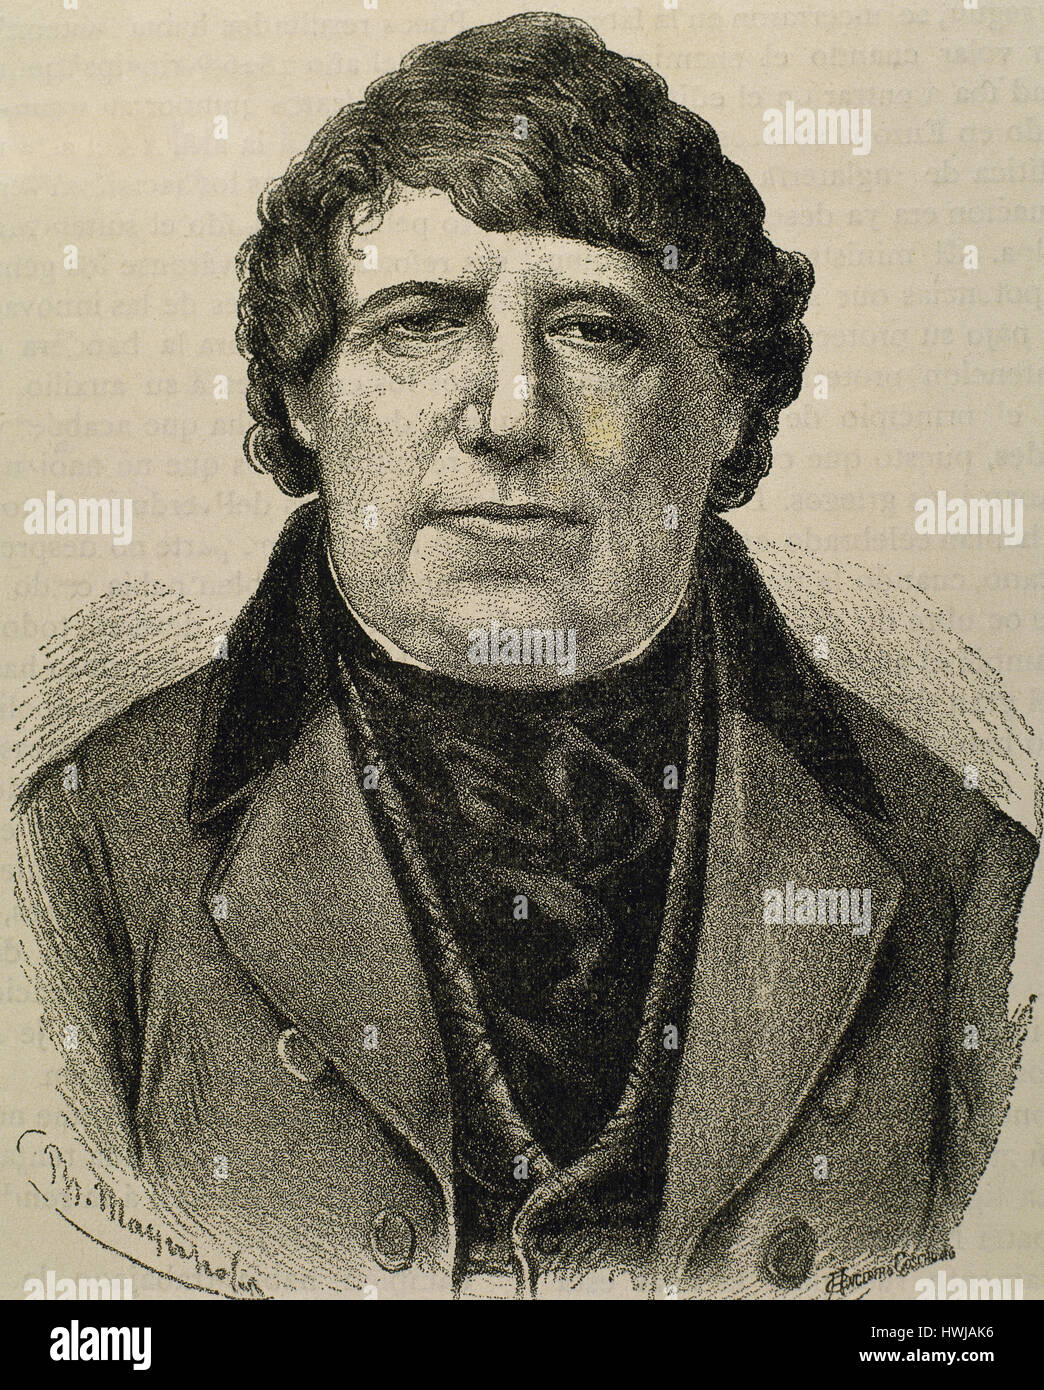 Daniel O'Connell (1775-1847). Irish political leader. Portrait. Engraving. Stock Photo